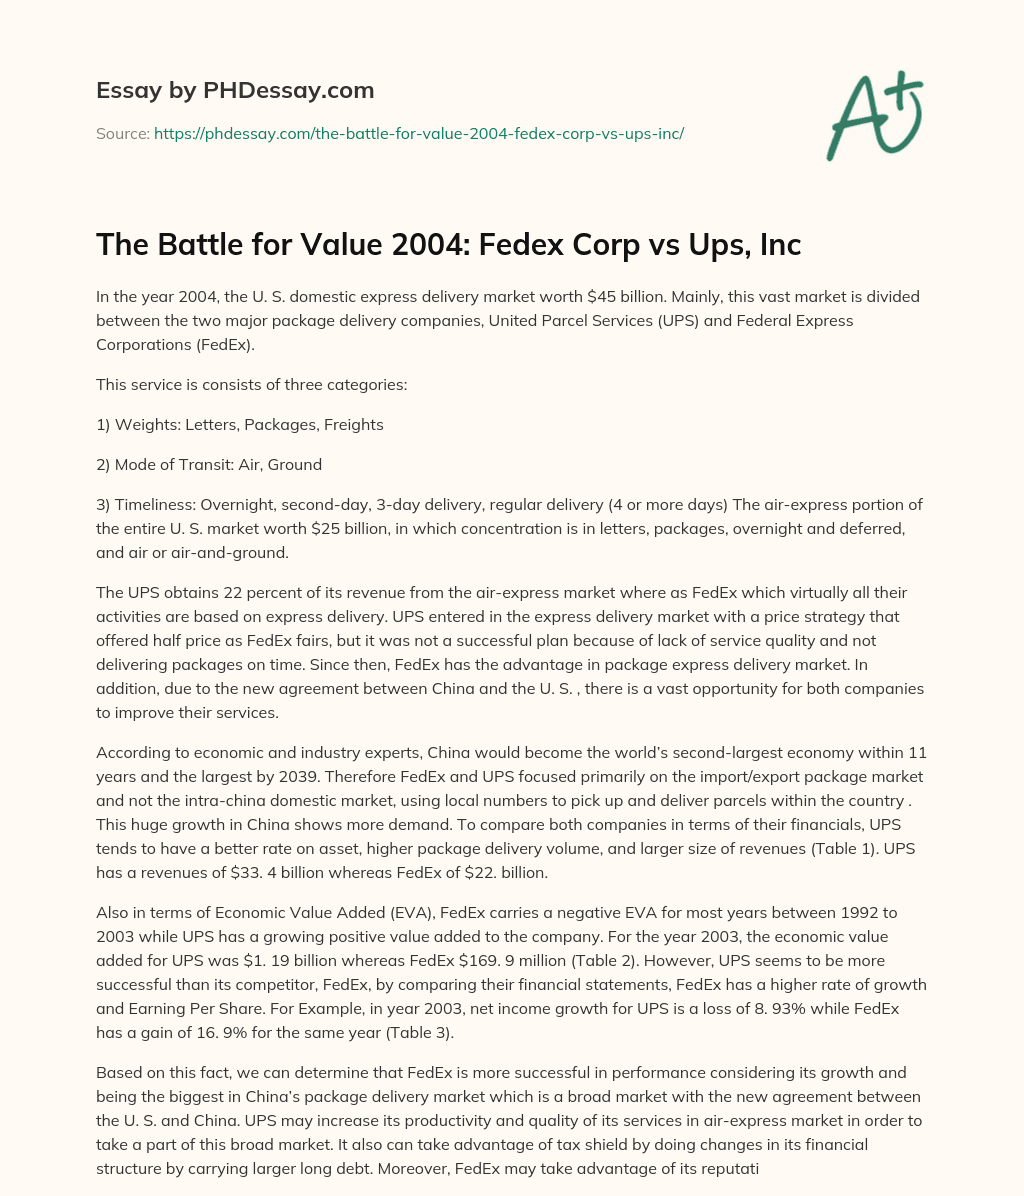 The Battle for Value 2004: Fedex Corp vs Ups, Inc essay